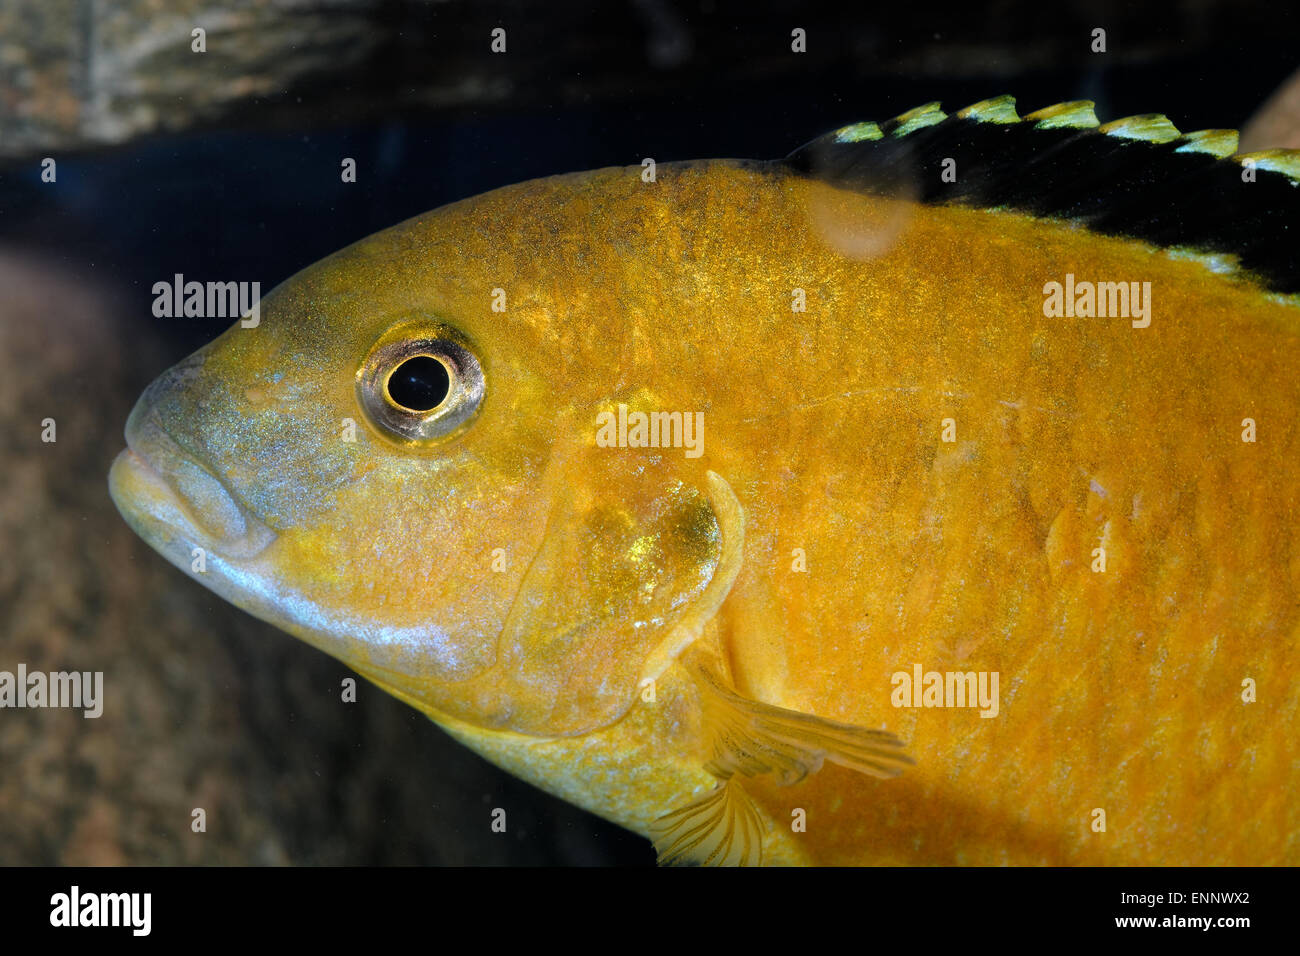 Nice portrait of yellow mouthbrooder of genus Labidochromis. Stock Photo